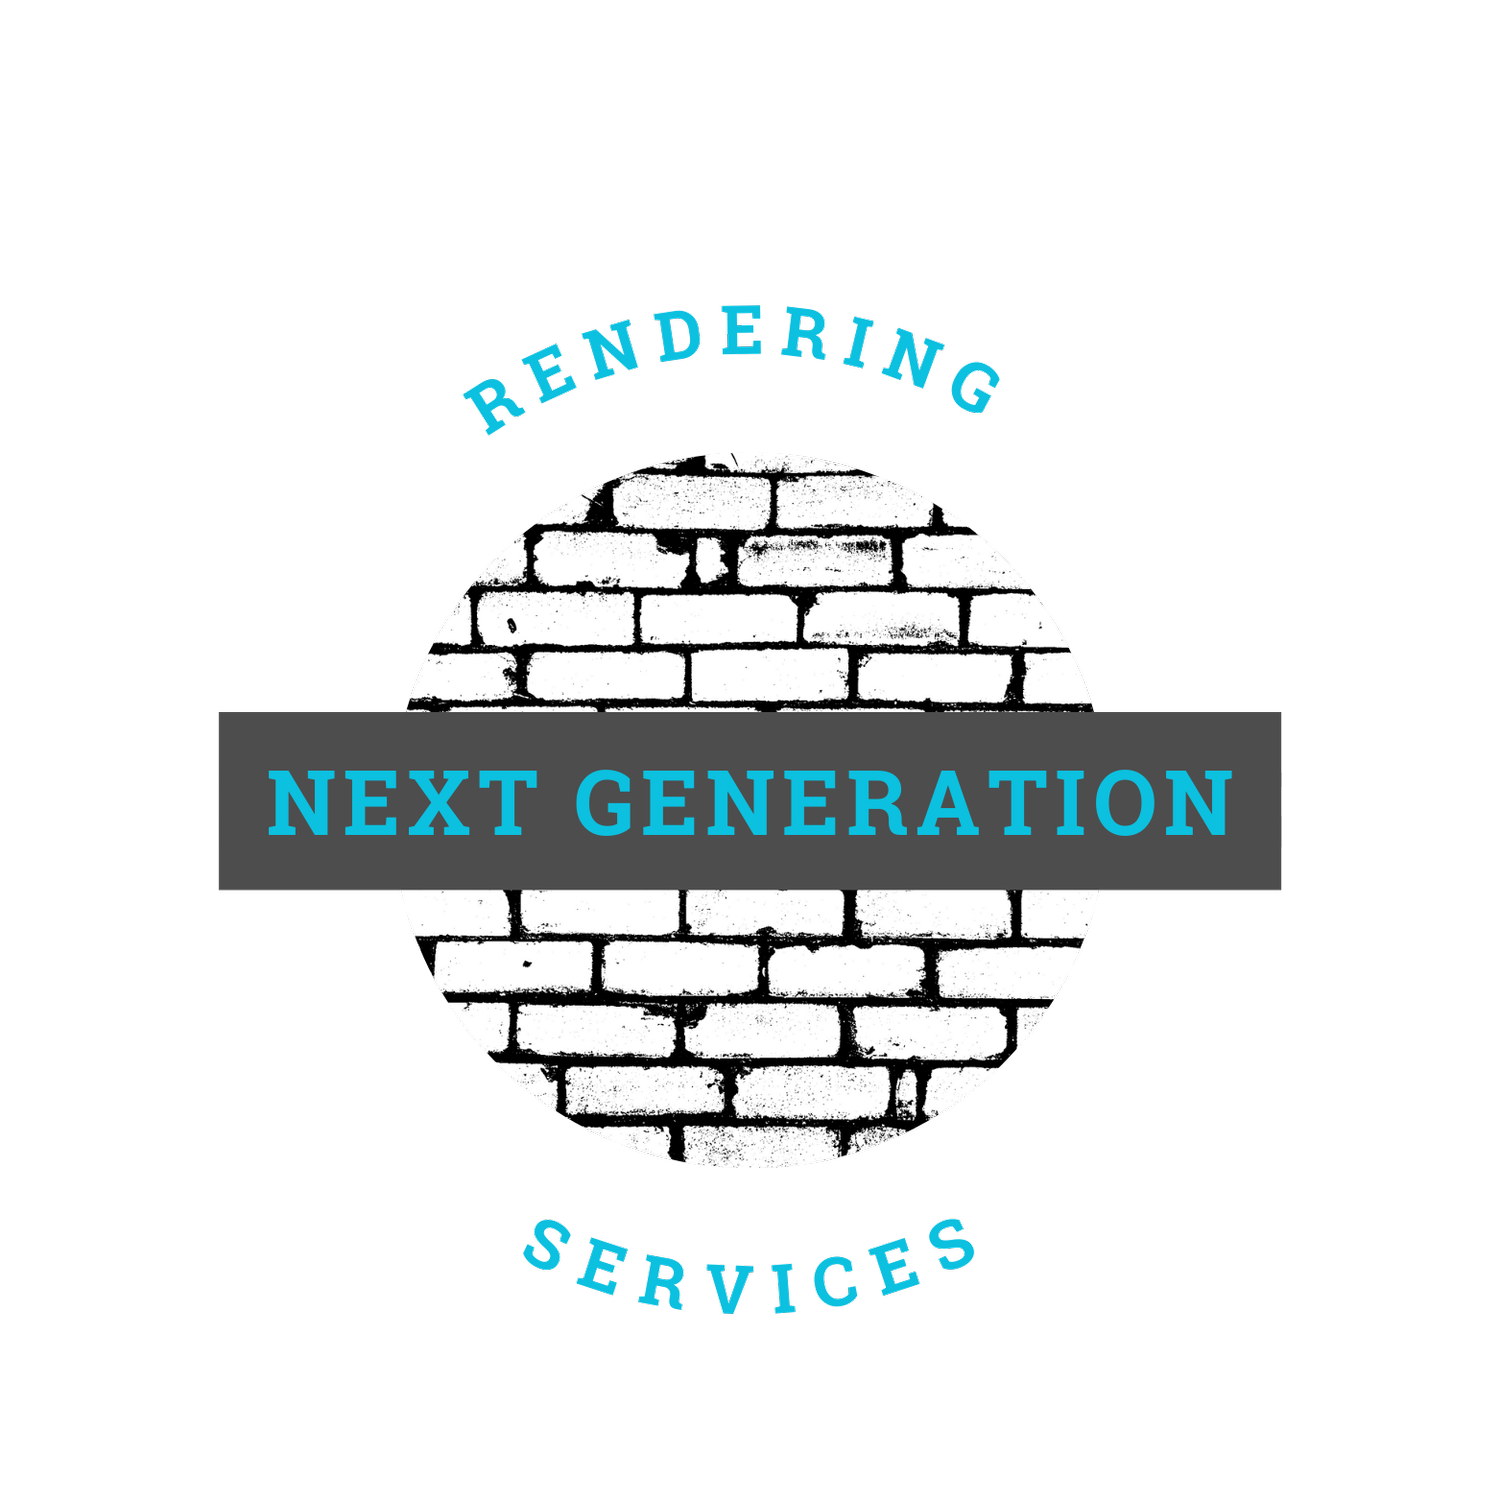 Next Generation Rendering Services